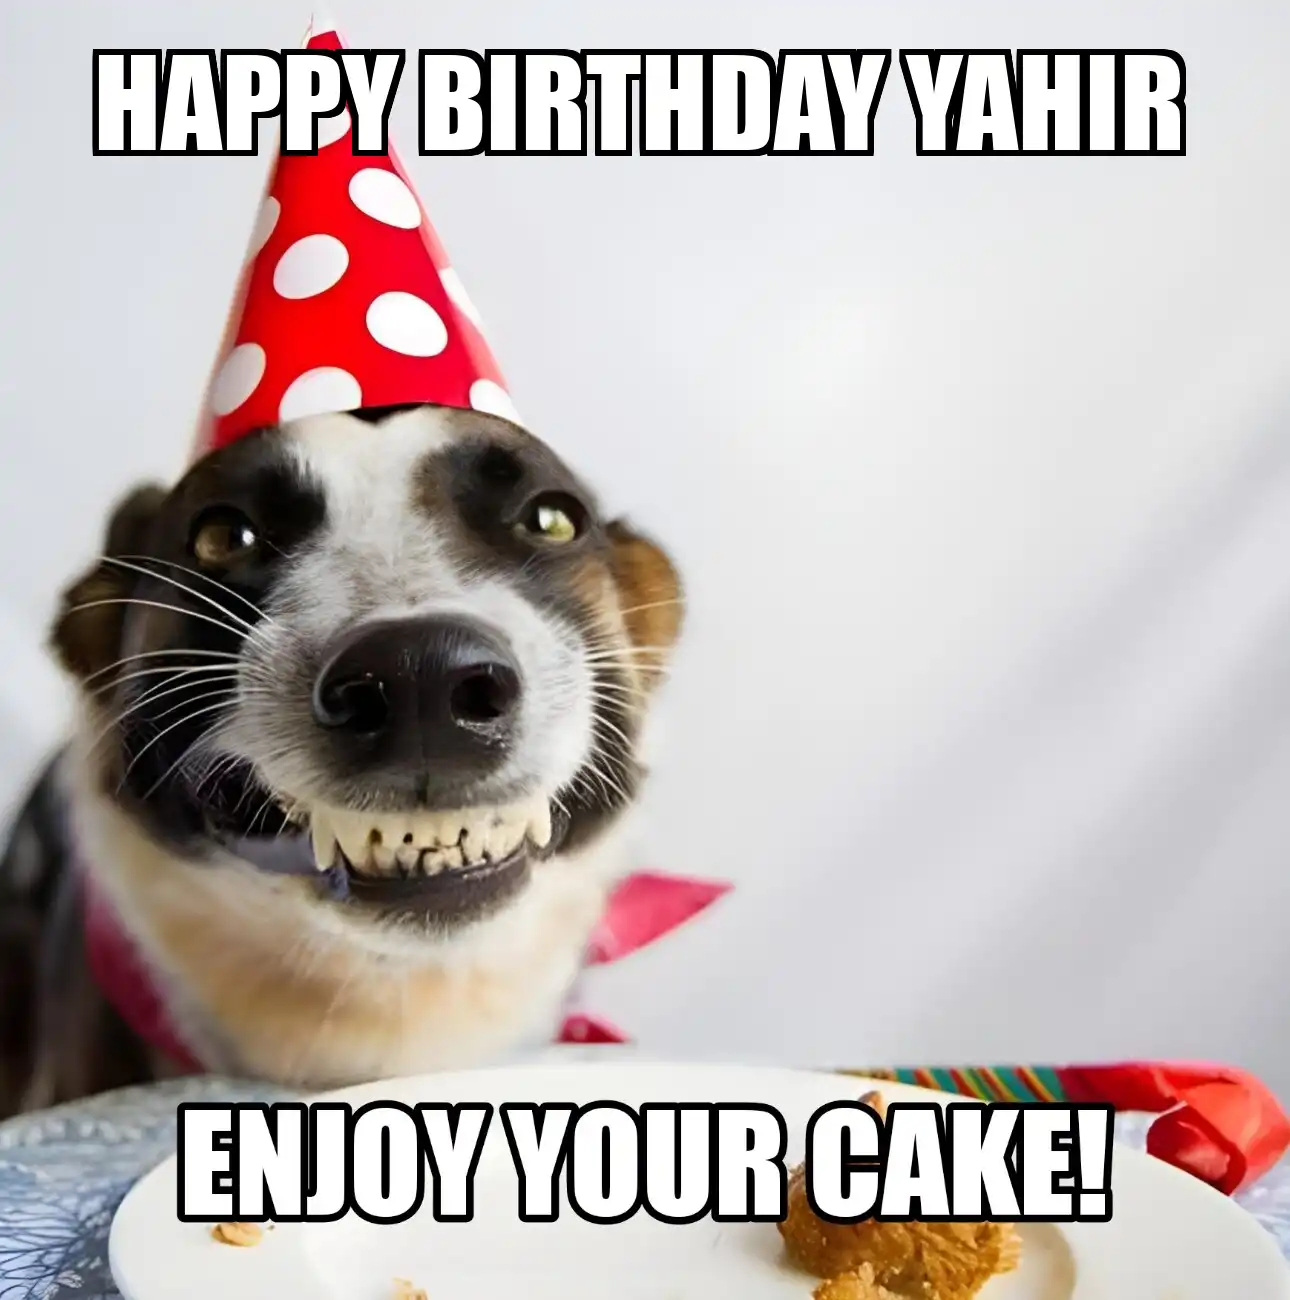 Happy Birthday Yahir Enjoy Your Cake Dog Meme